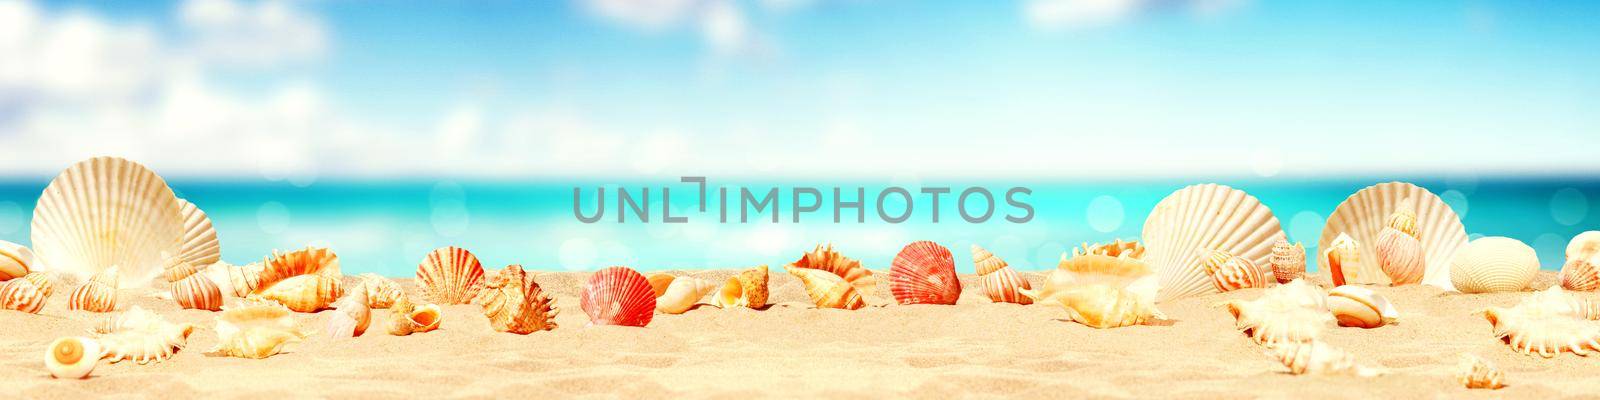 Seashells on seashore - beach holiday background.